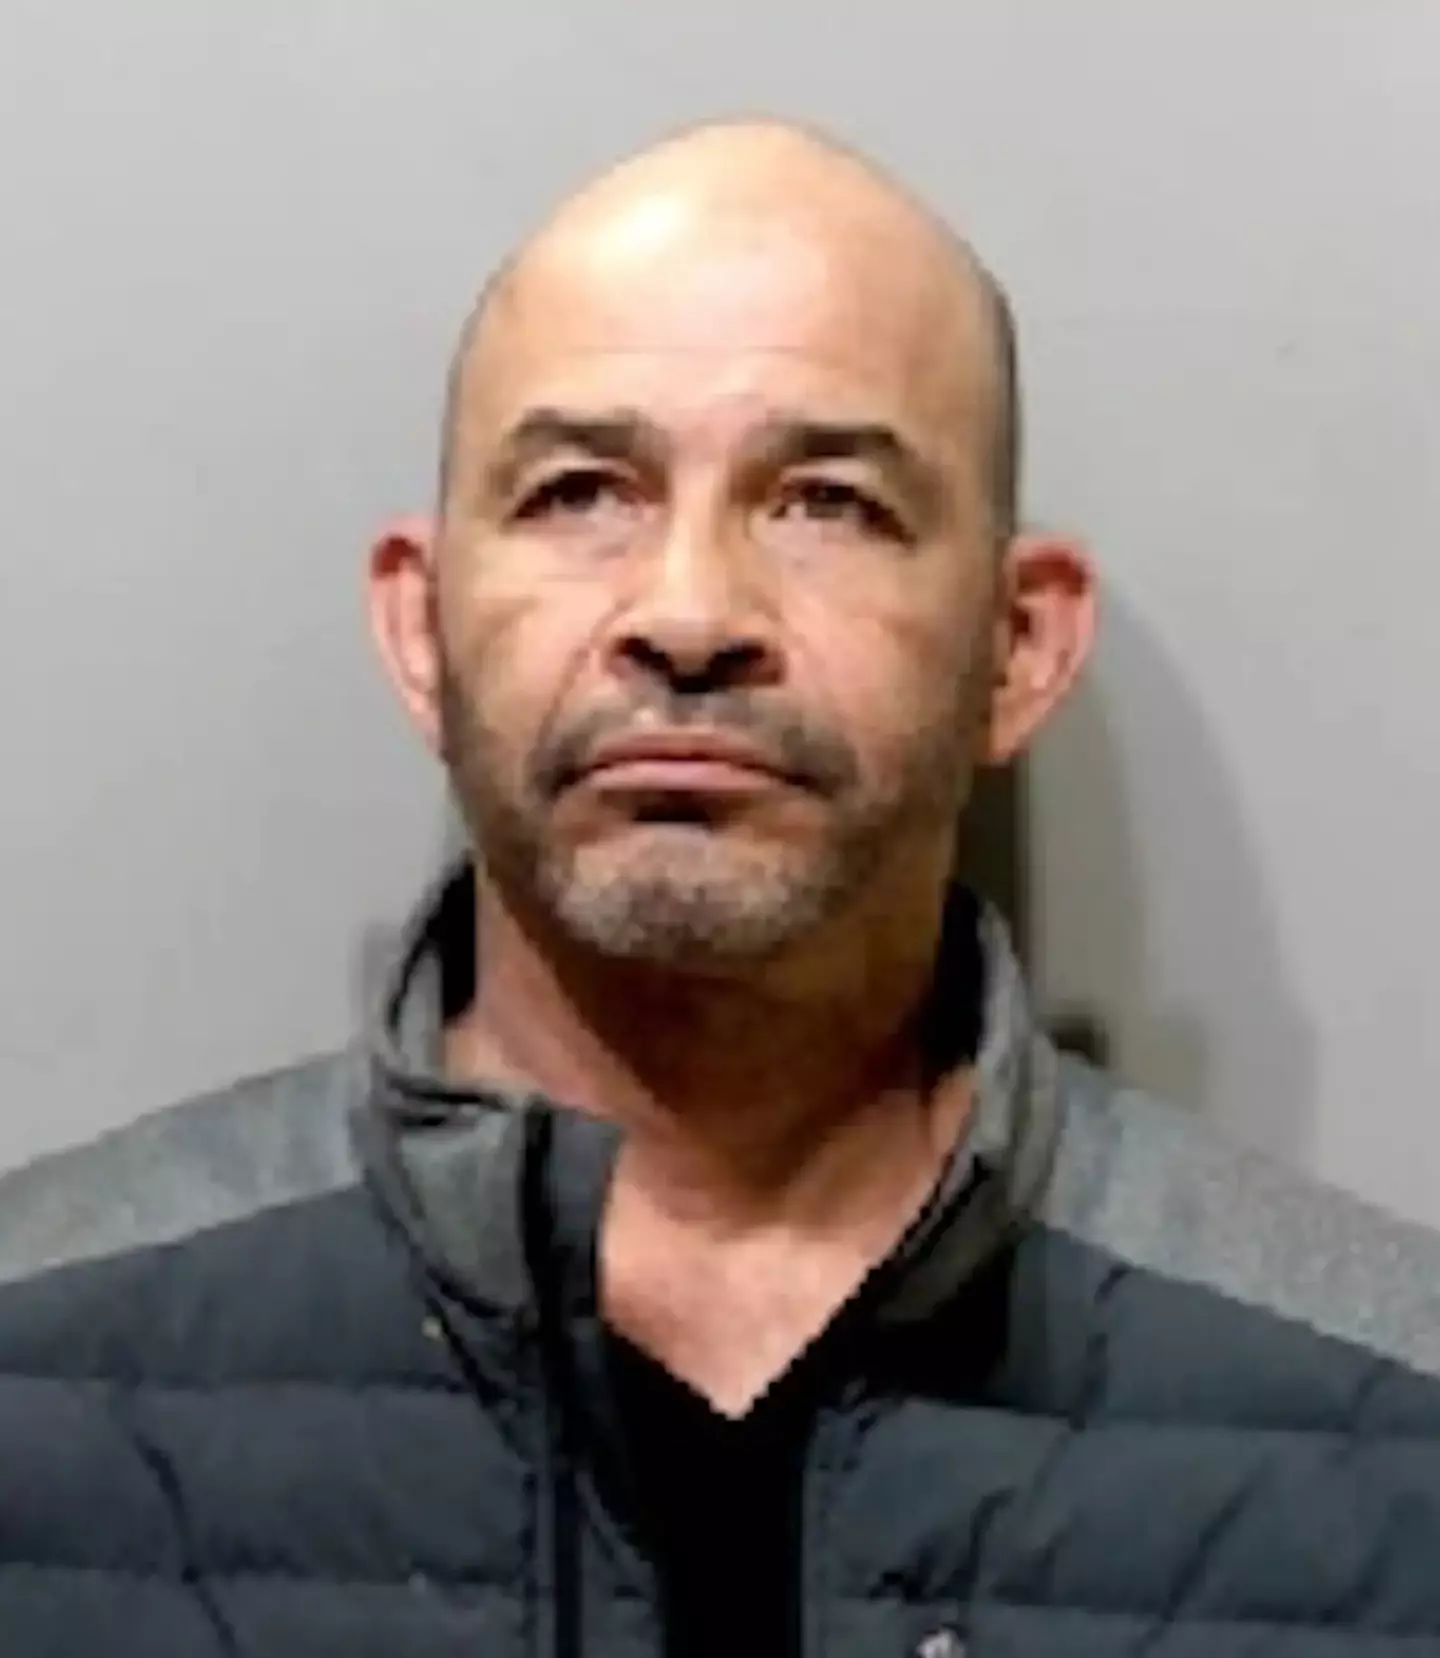 Johnny Yenshaw was arrested on suspicion of the murder.